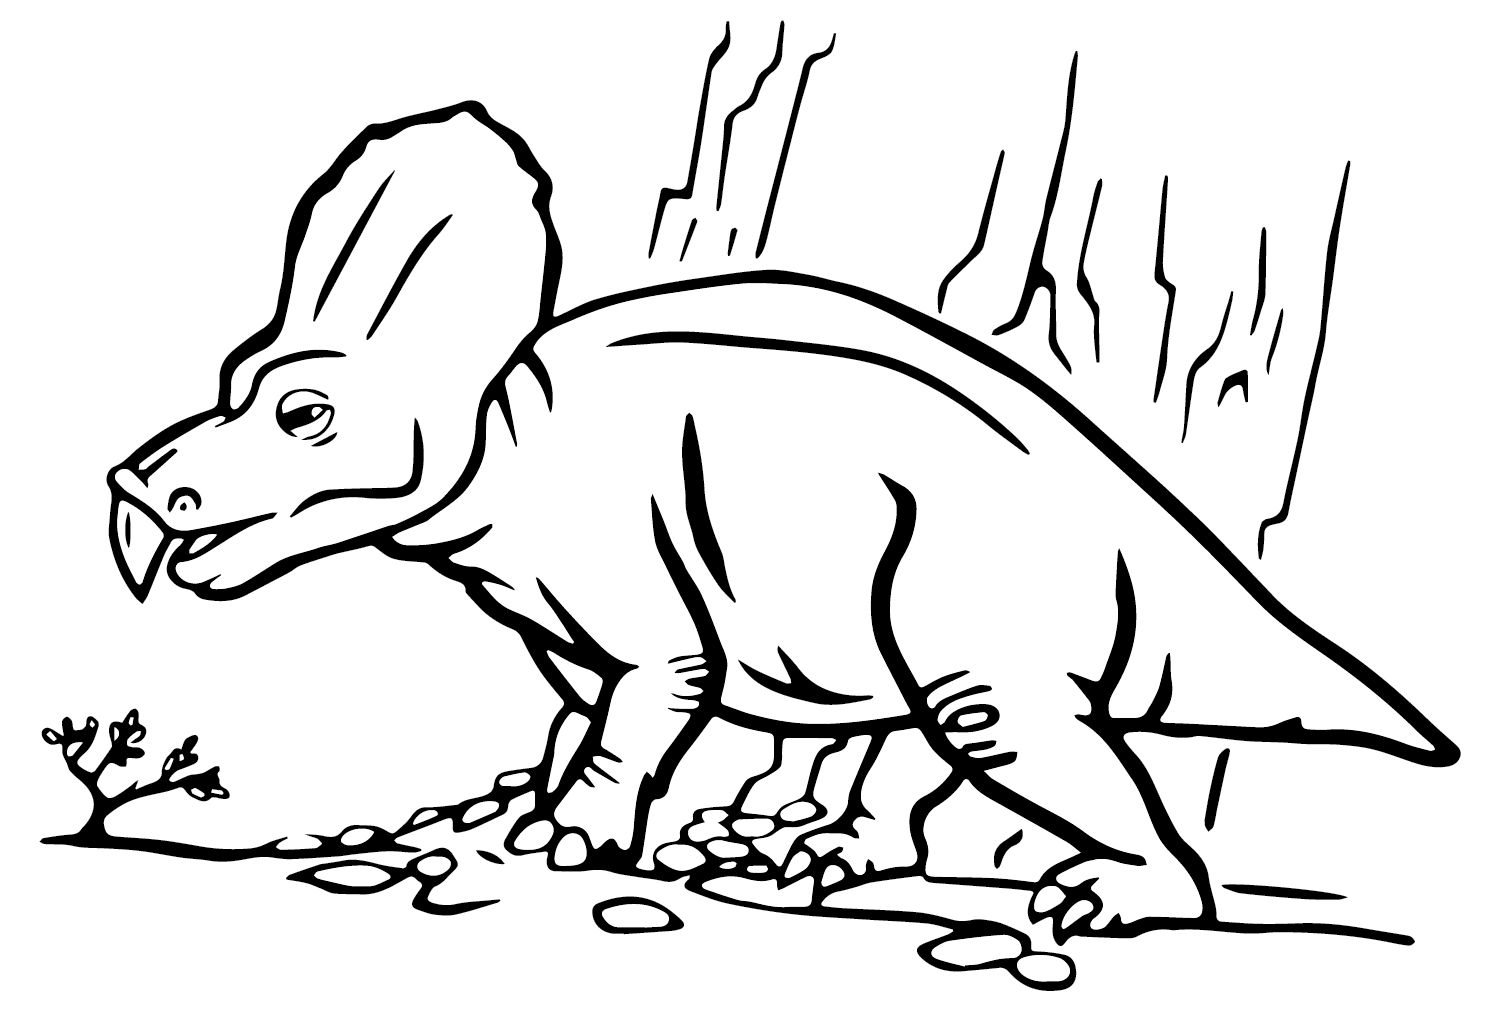 Protoceratops-Dinosaurier-Malseite von Protoceratops